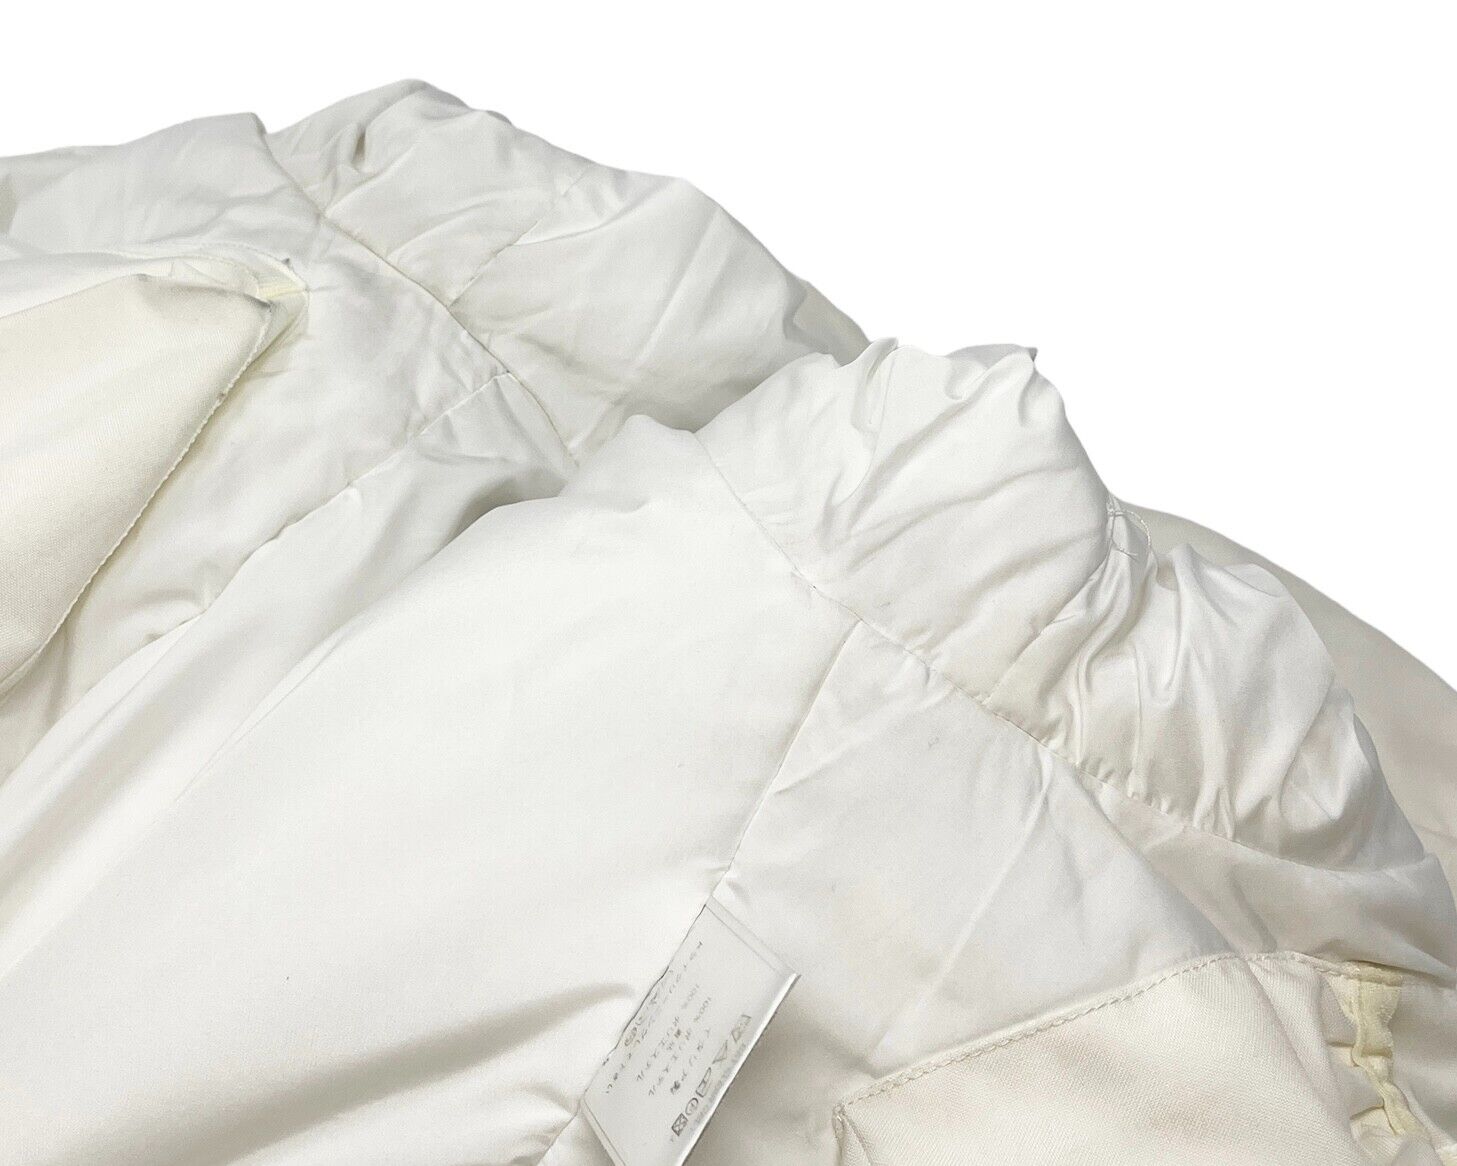 Christian Dior Vintage Logo Puffer Jacket #40 Zip White Silver Polyester RankAB